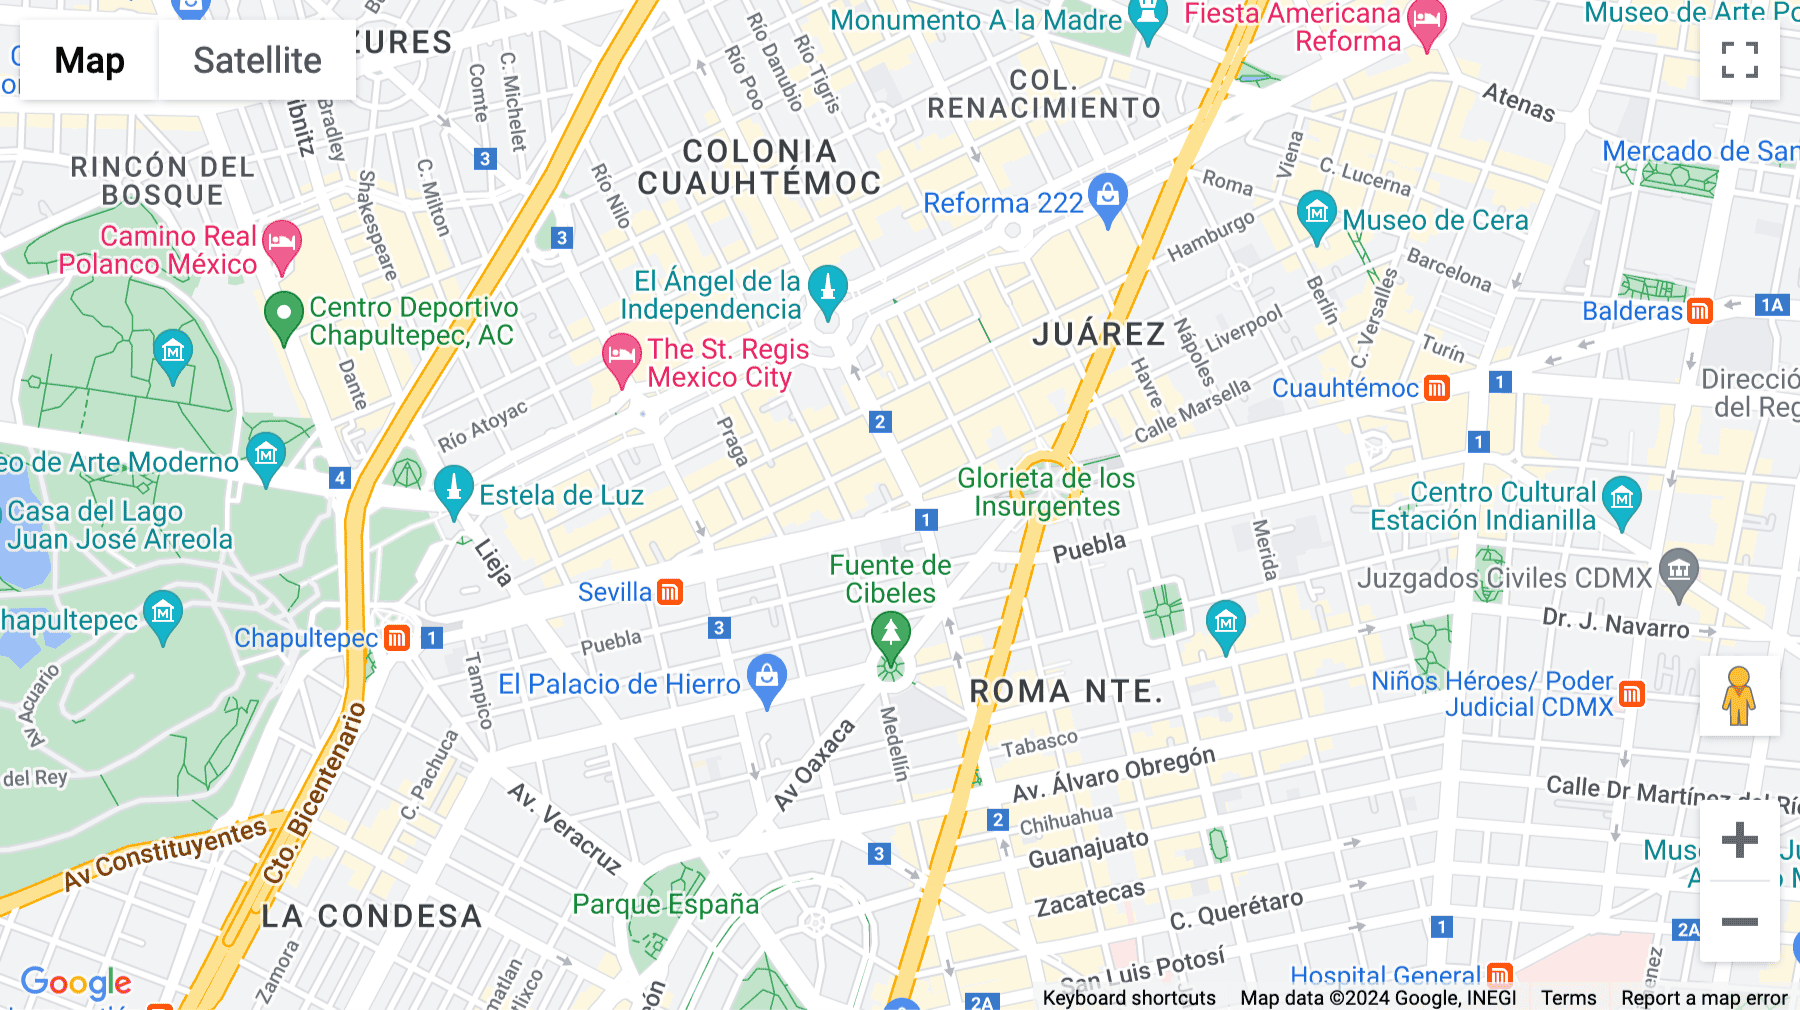 Click for interative map of Liverpool no 174, Colonia Juarez, Cuauhtemoc, Mexico City